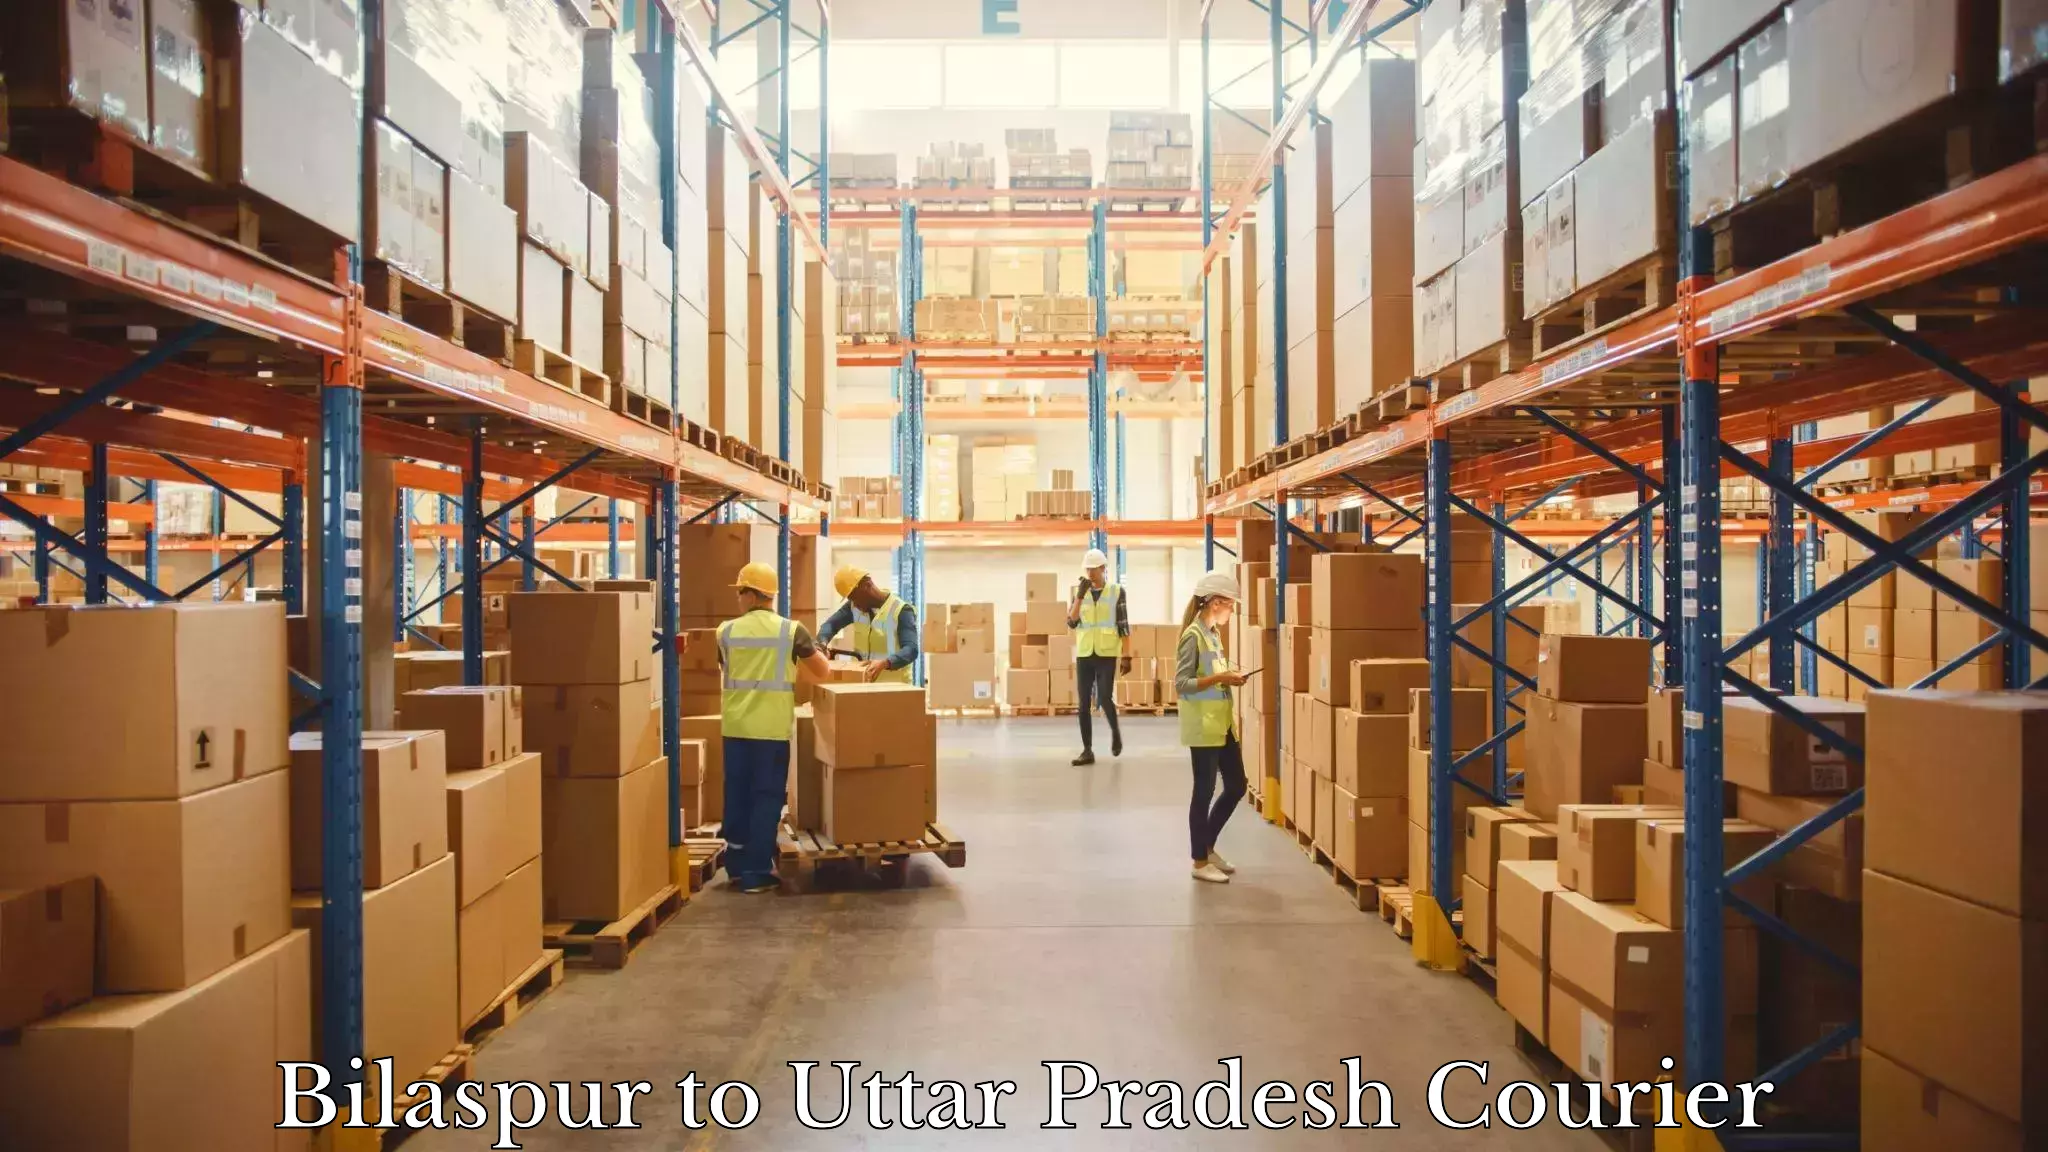 Courier service innovation Bilaspur to Rajesultanpur